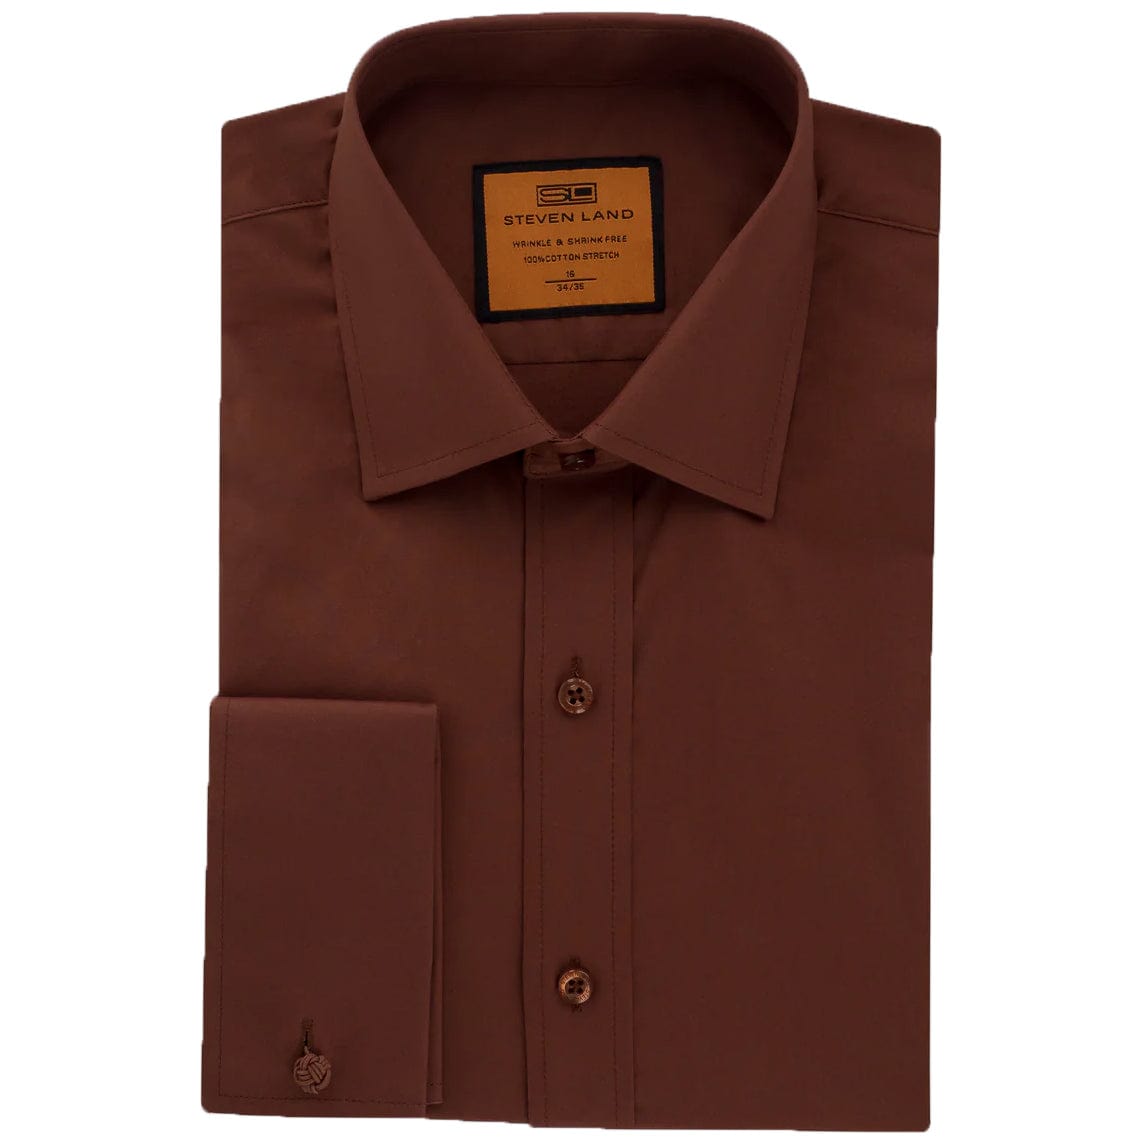 LND NECKWEAR INC. S CF BROWN / 15.5 Steven Land Dress Shirt| Classic Fit | French Cuff | 100% Cotton/Ds115f 4/5